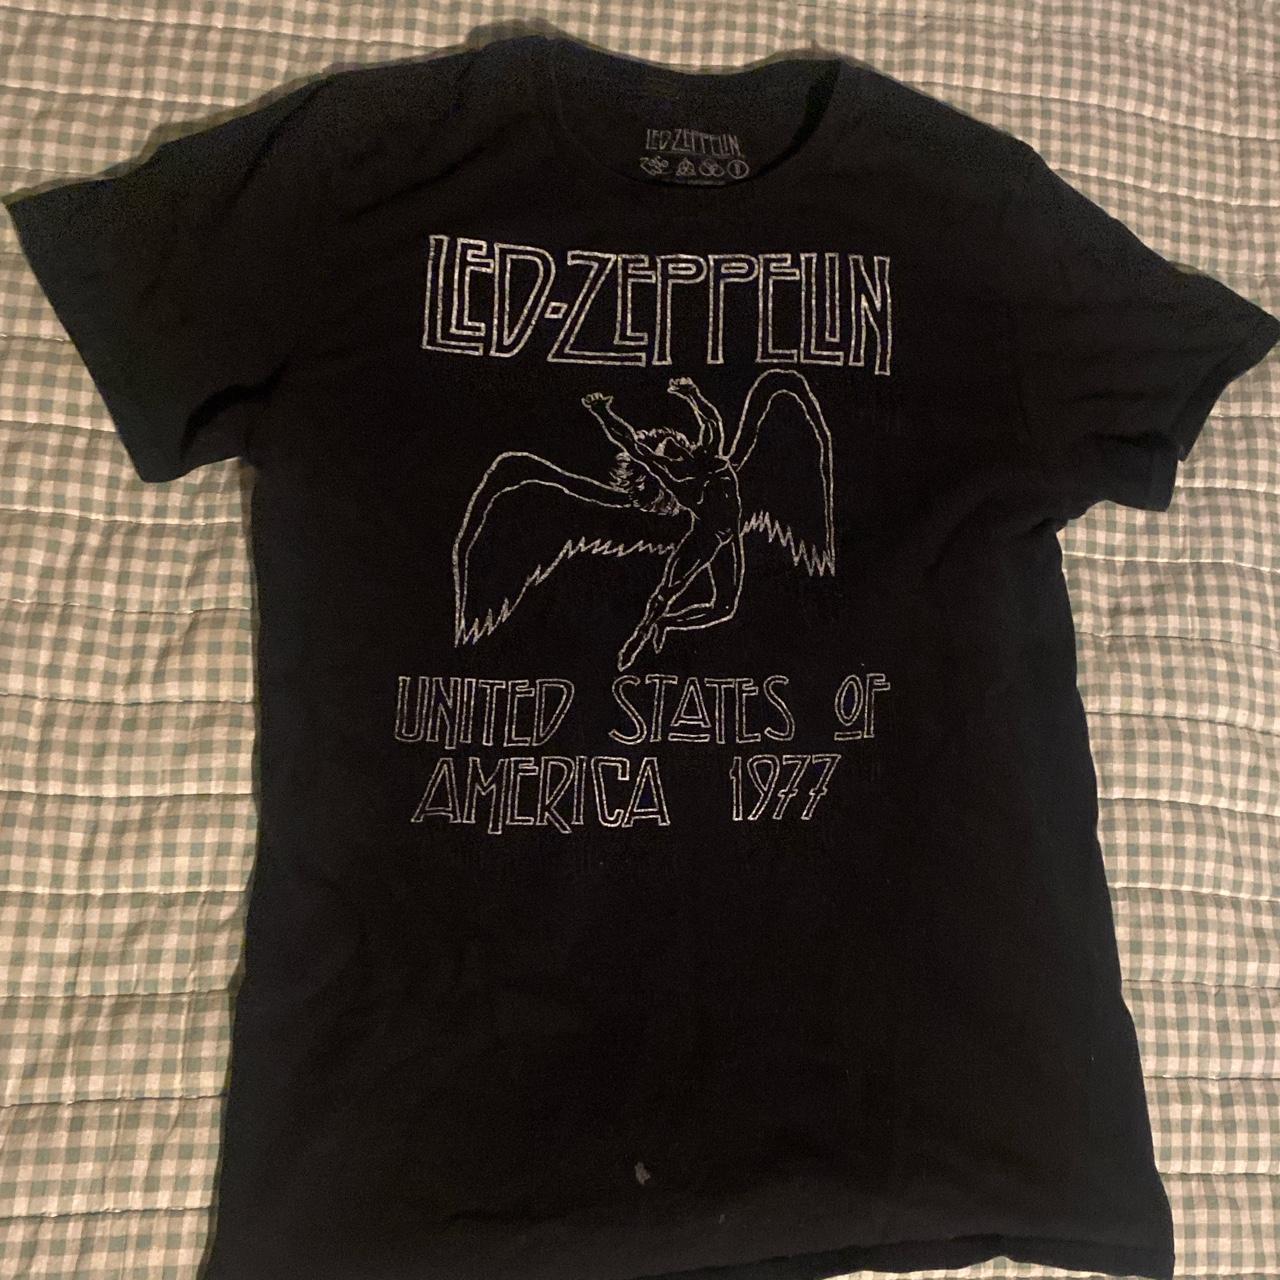 Led Zeppelin Band T Shirt Size Medium #bandtee... - Depop